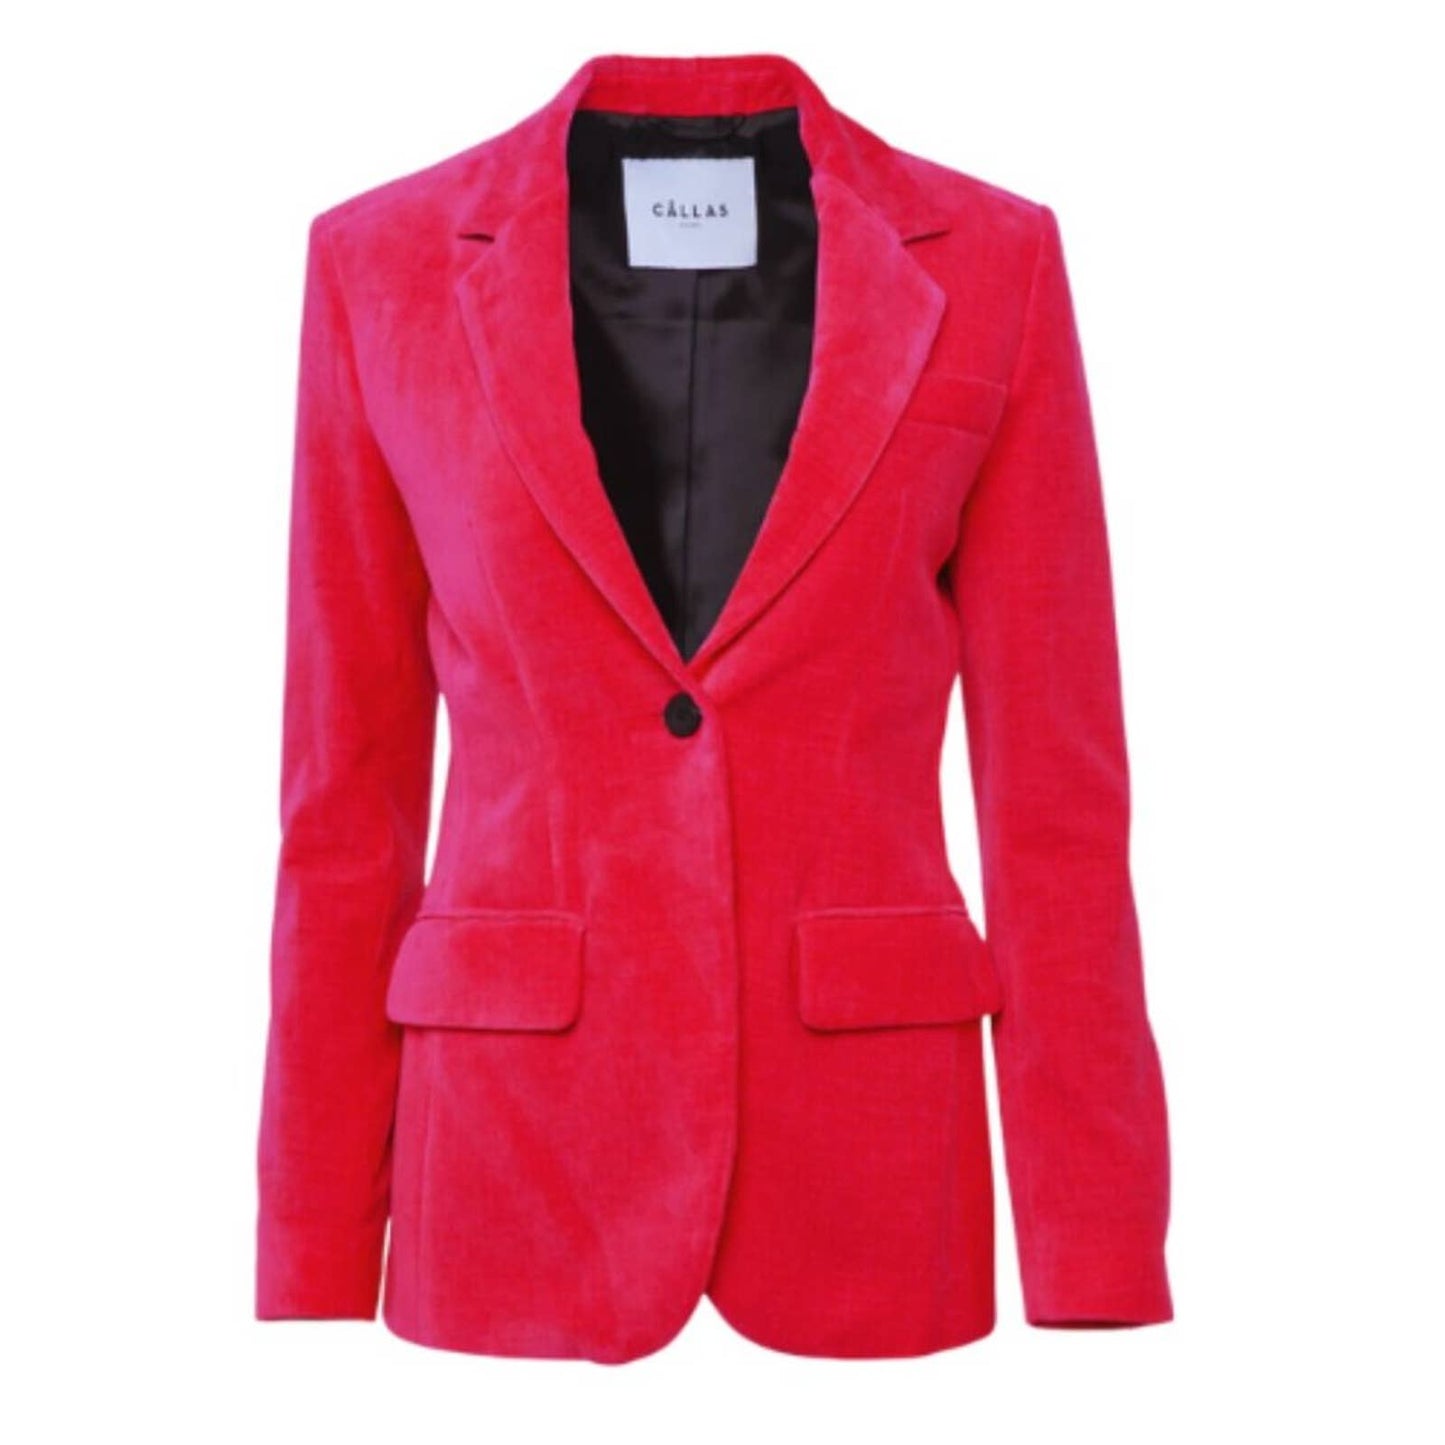 Callas Milano James Jacket Velvet Pink Blazer Size Italy 40 US 4